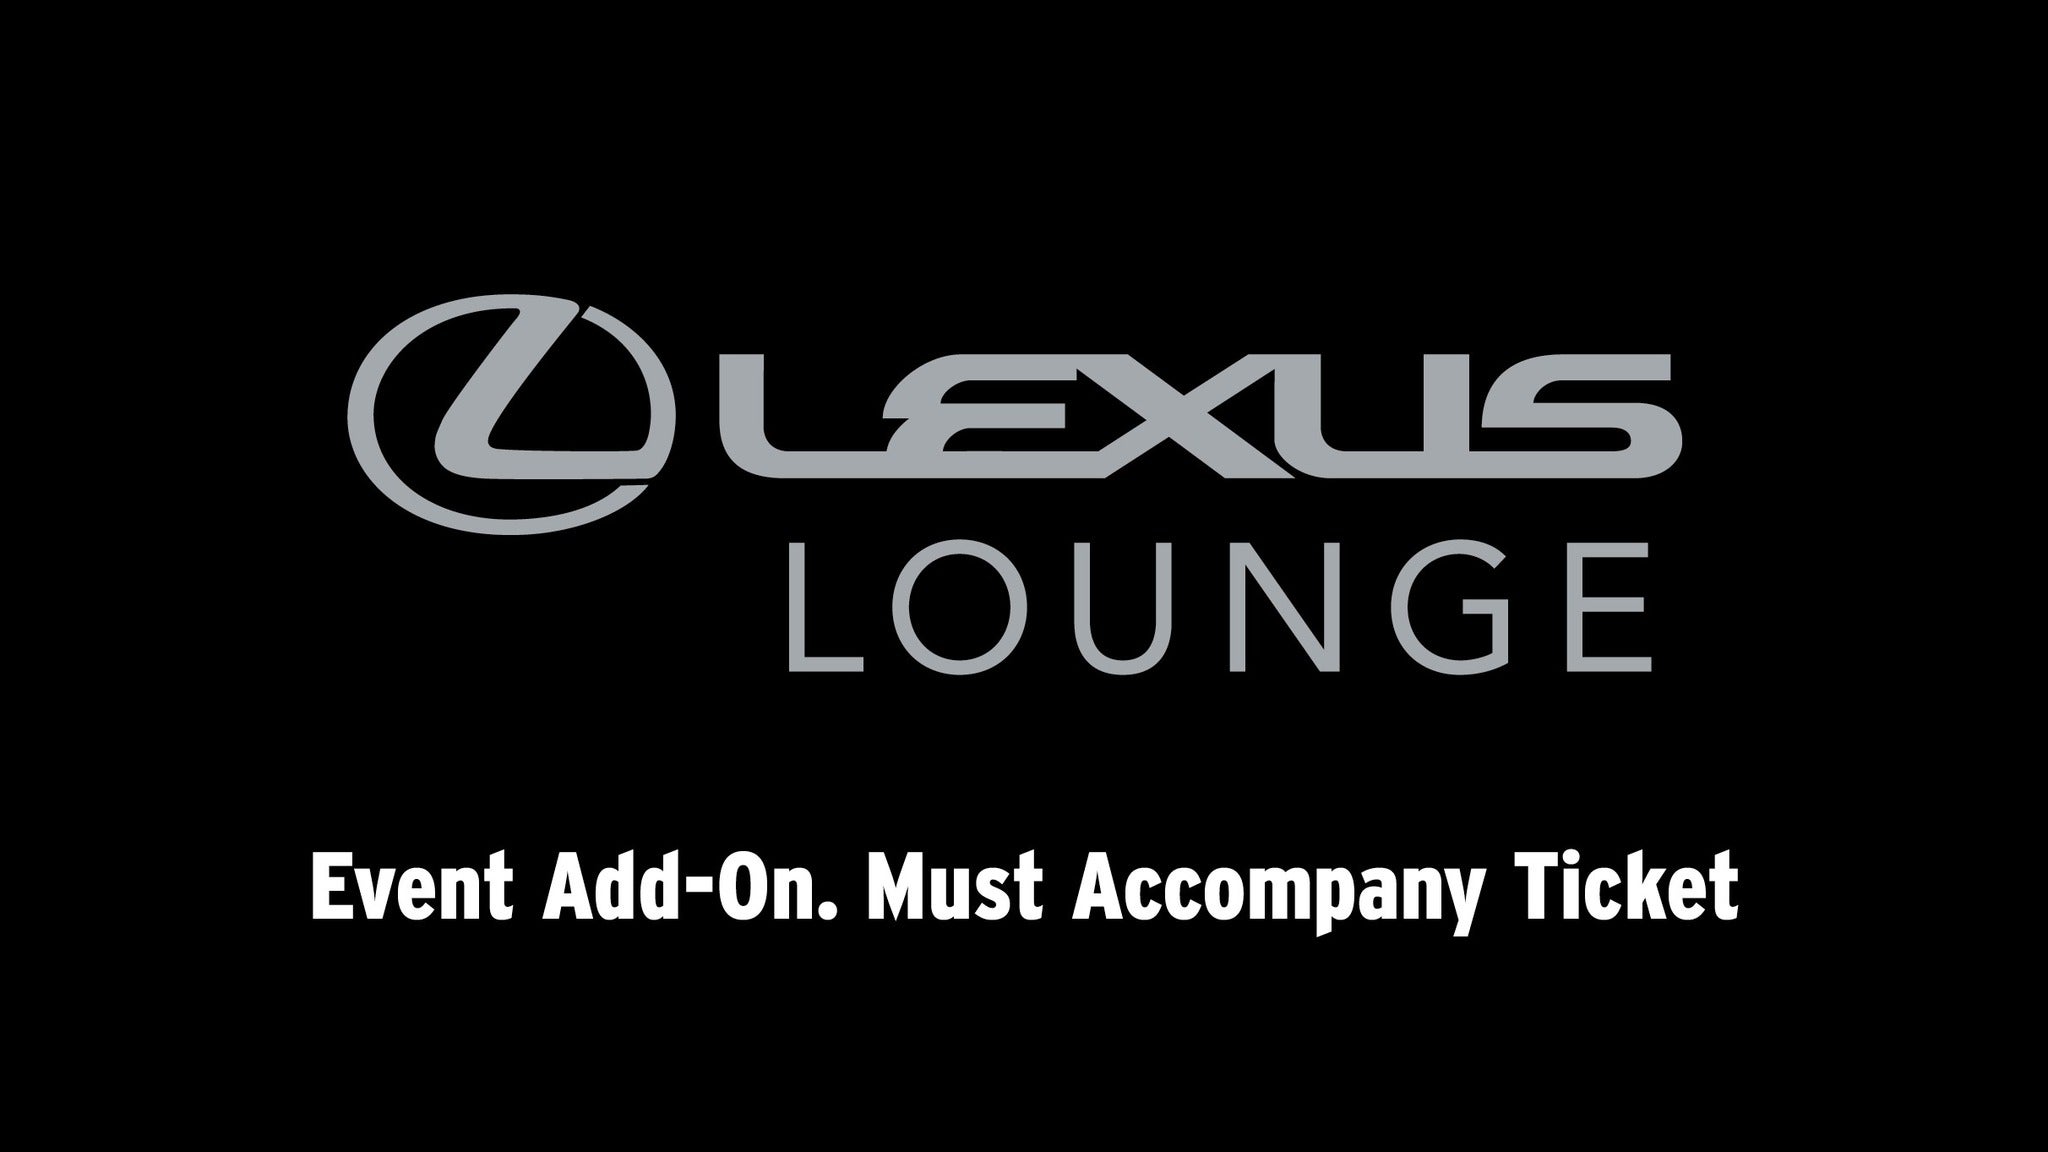 Lexus Lounge Access presale information on freepresalepasswords.com